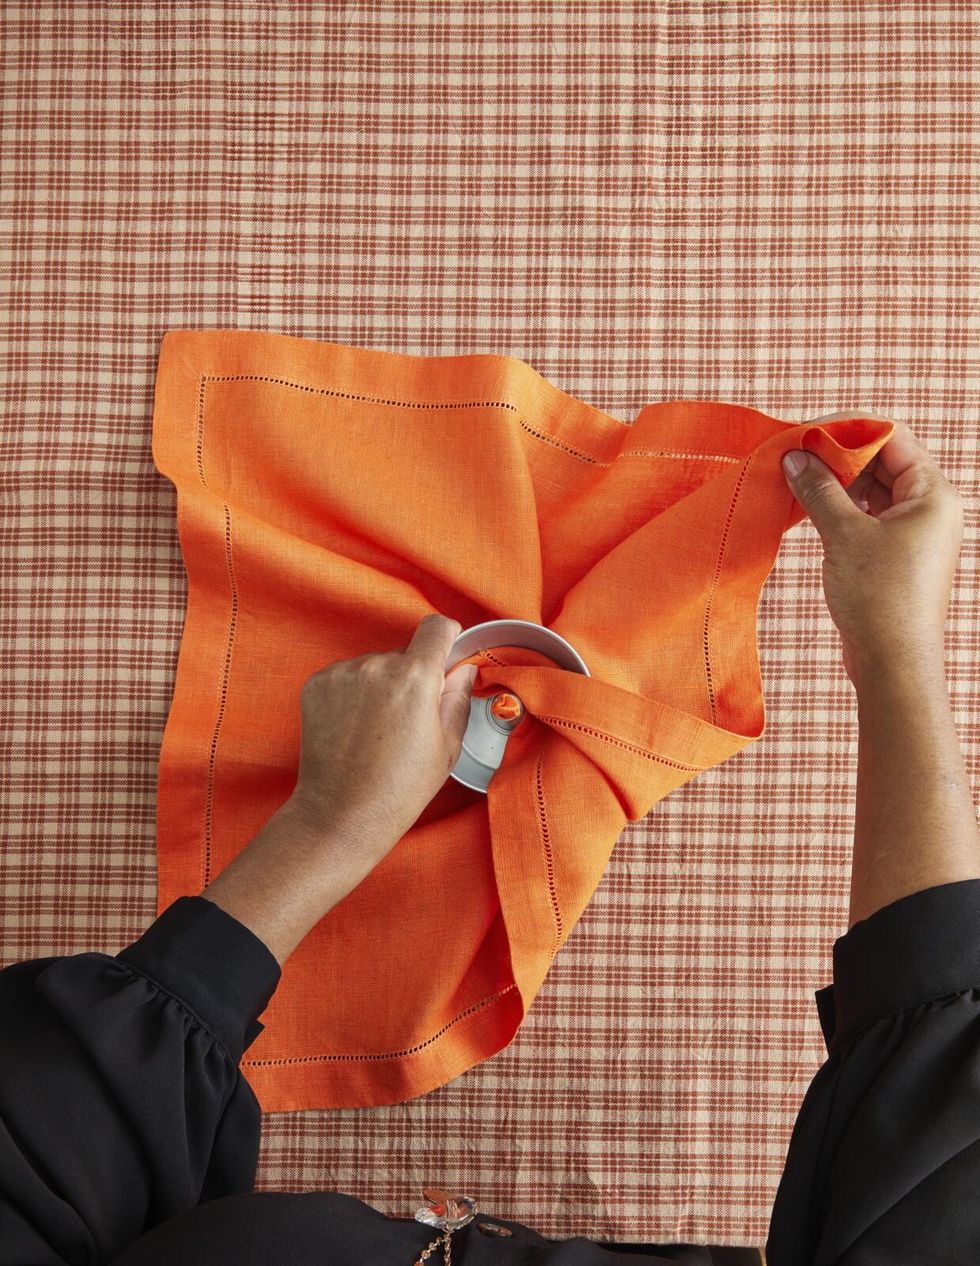 hands hold orange napkin and bundt pan